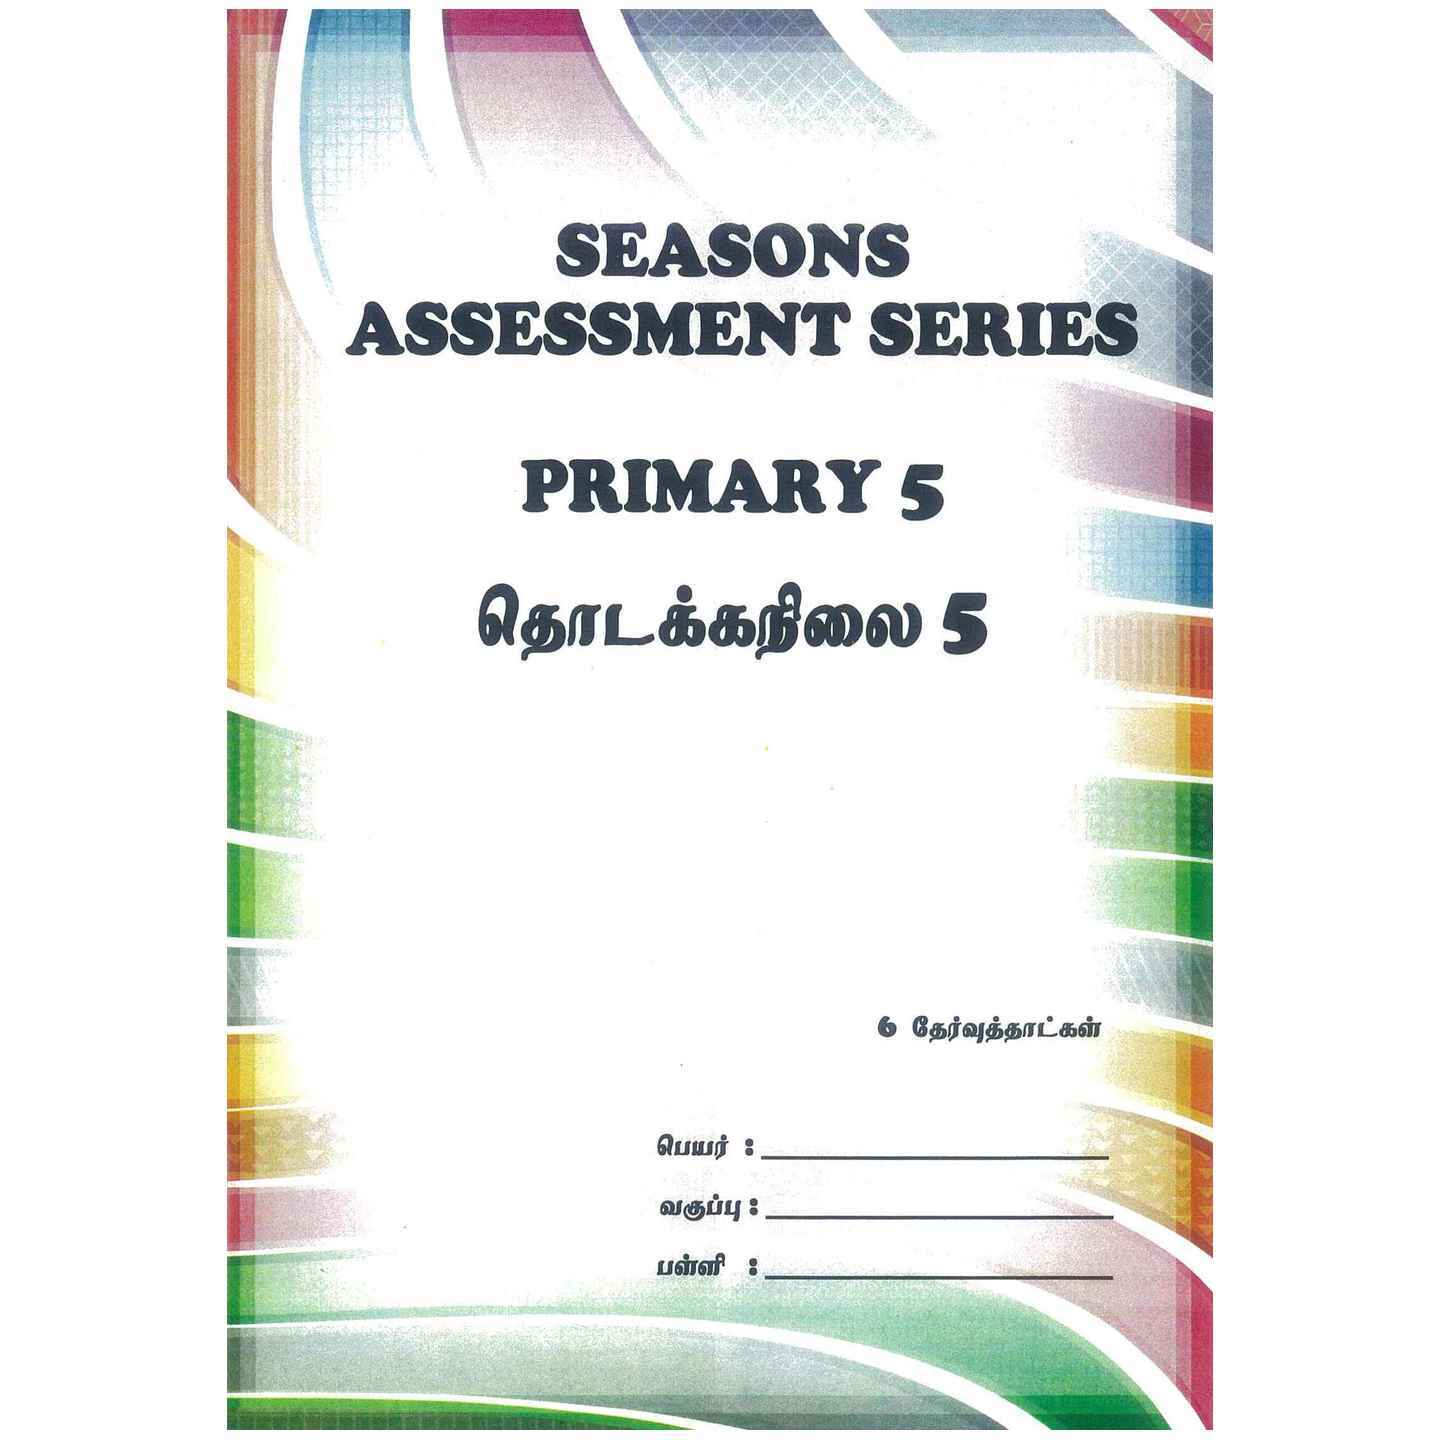 Seasons Assessment Series Primary 5